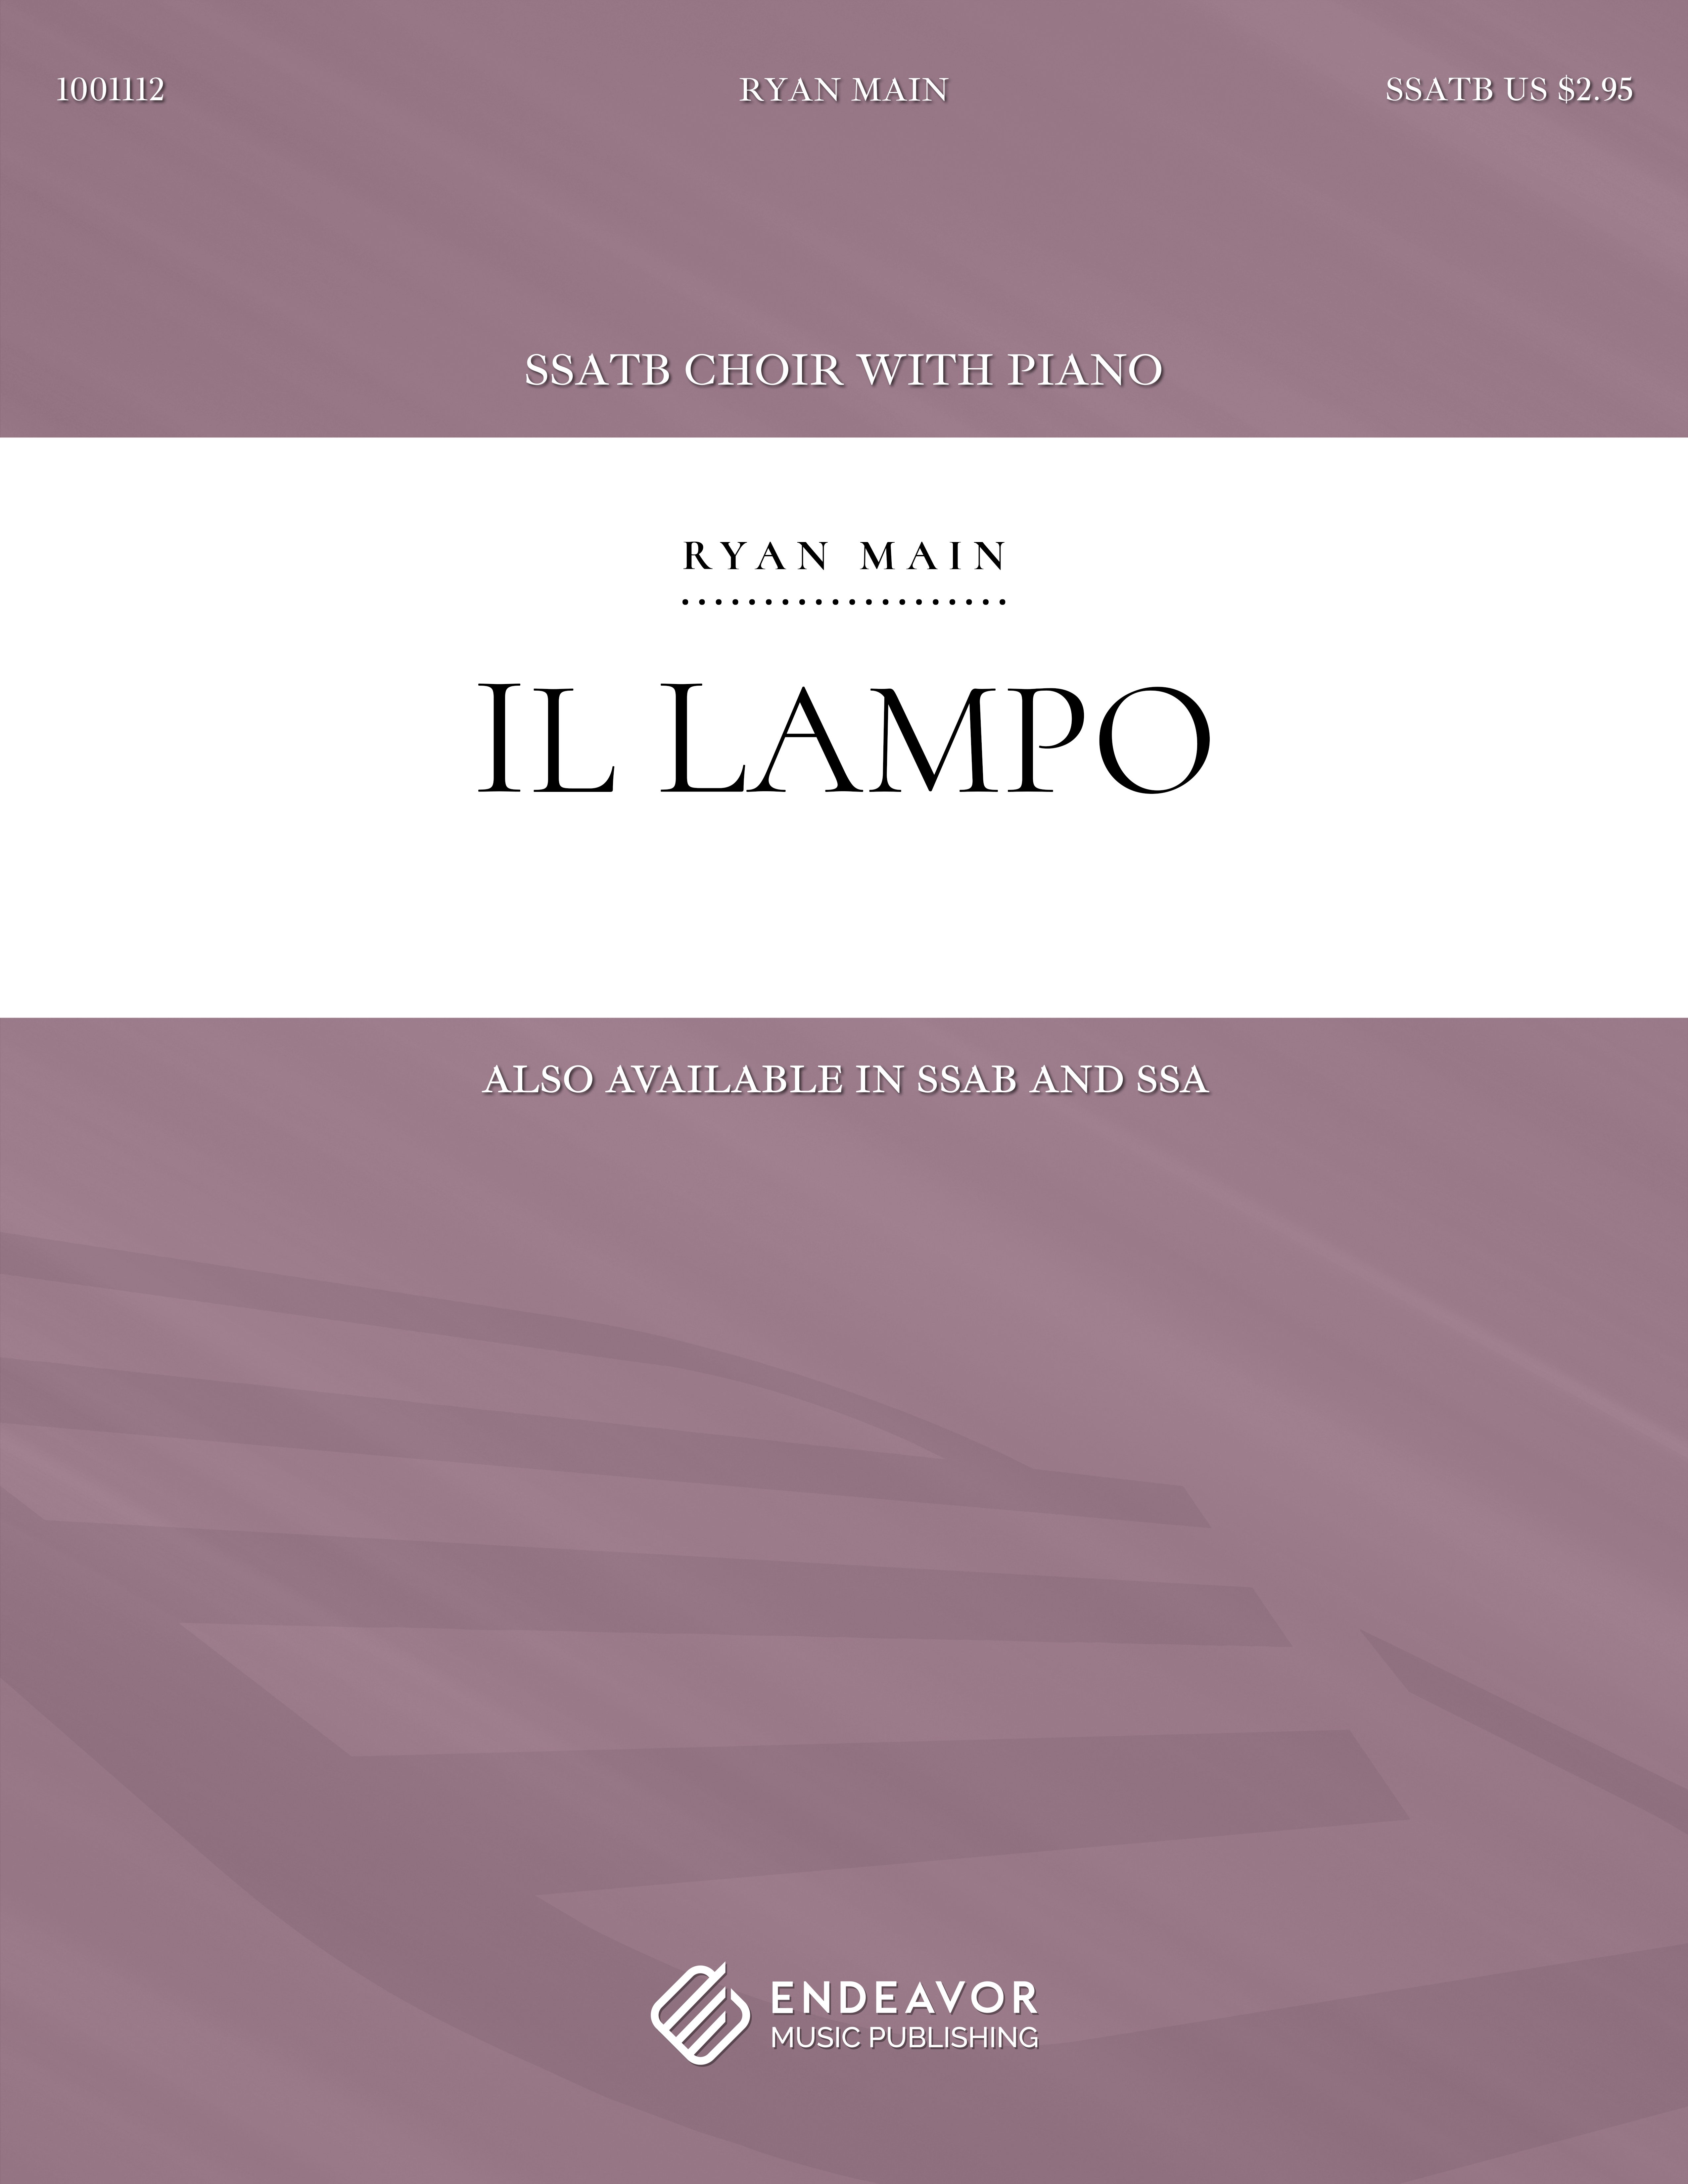 Il Lampo community sheet music cover